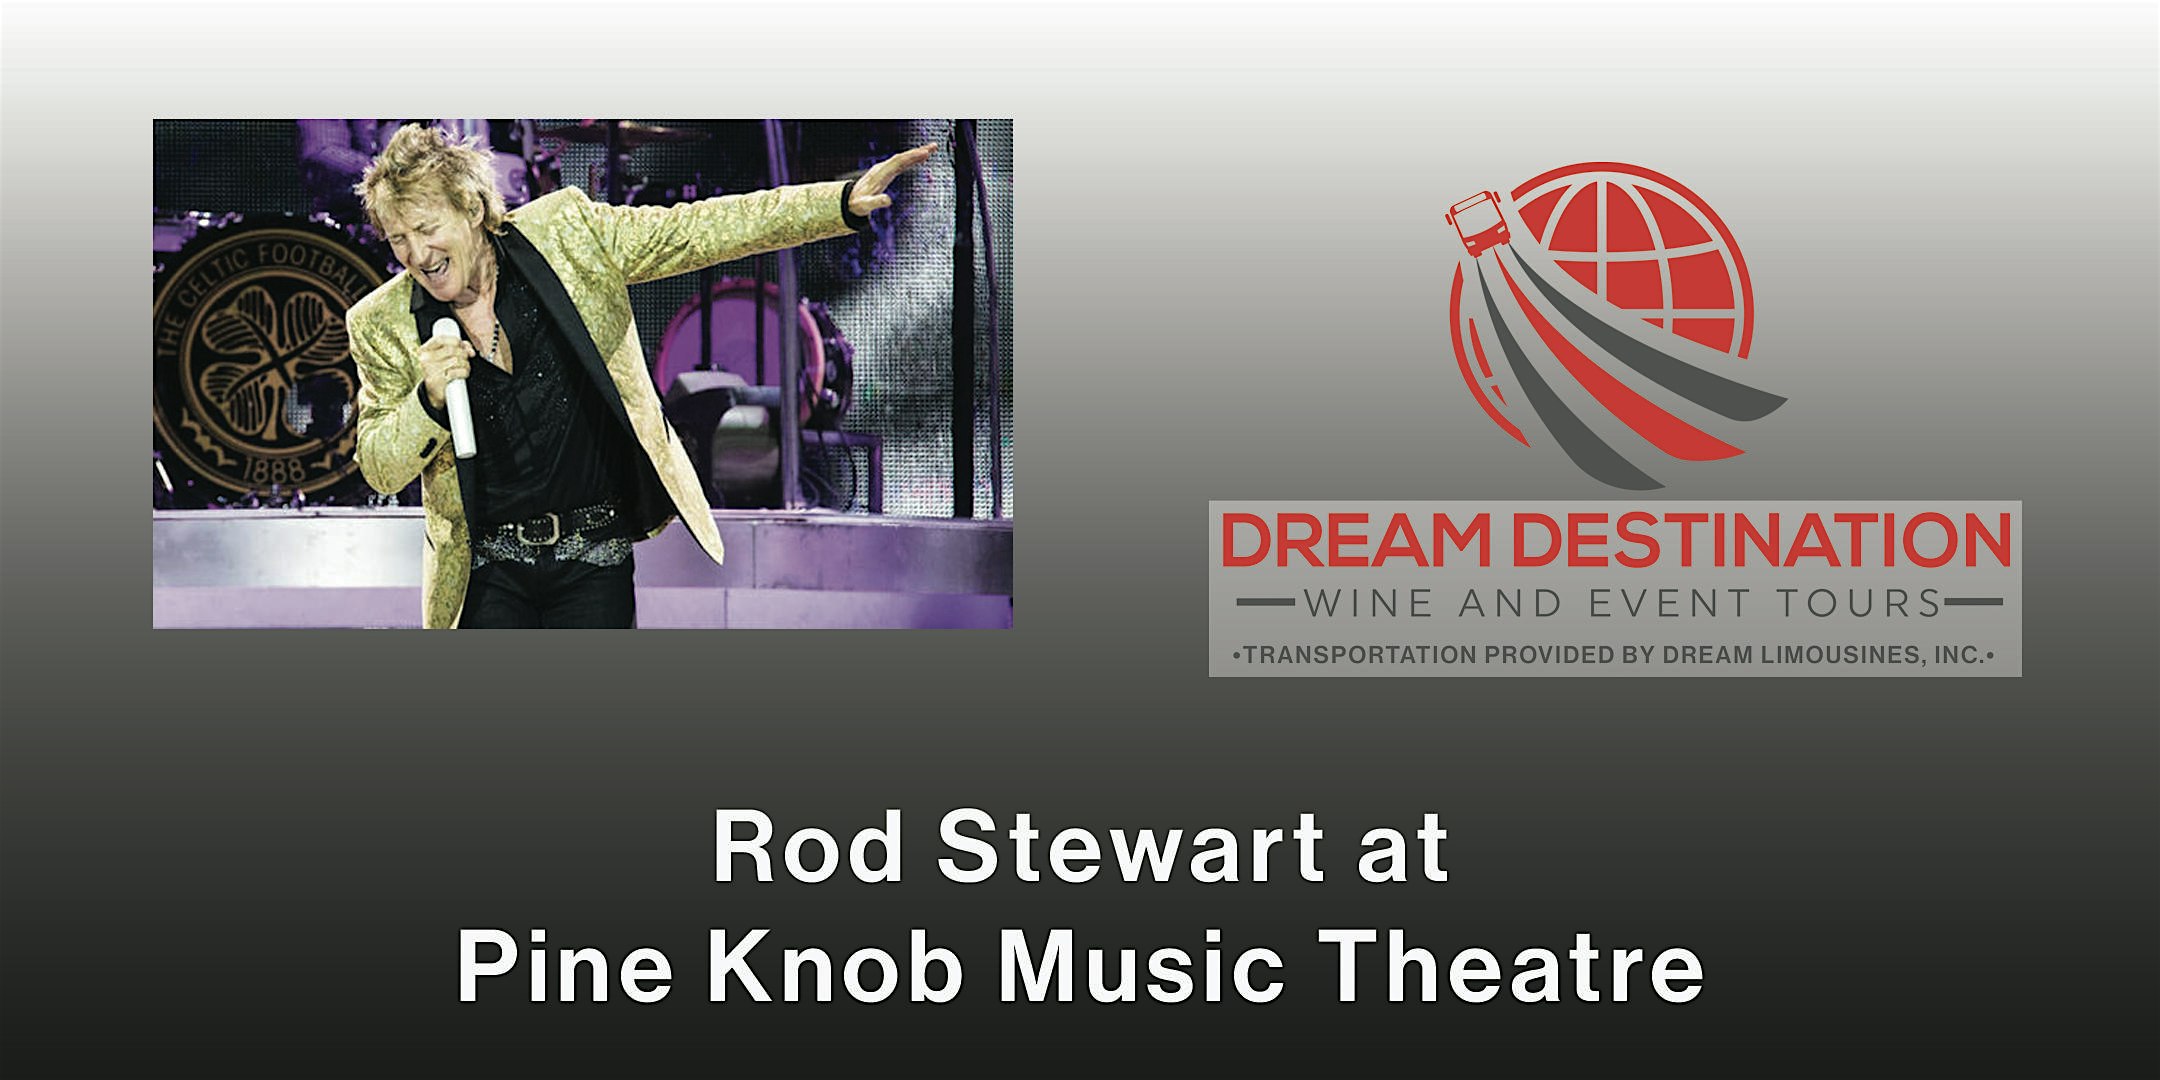 Shuttle Bus to See Rod Stewart at Pine Knob Music Theatre